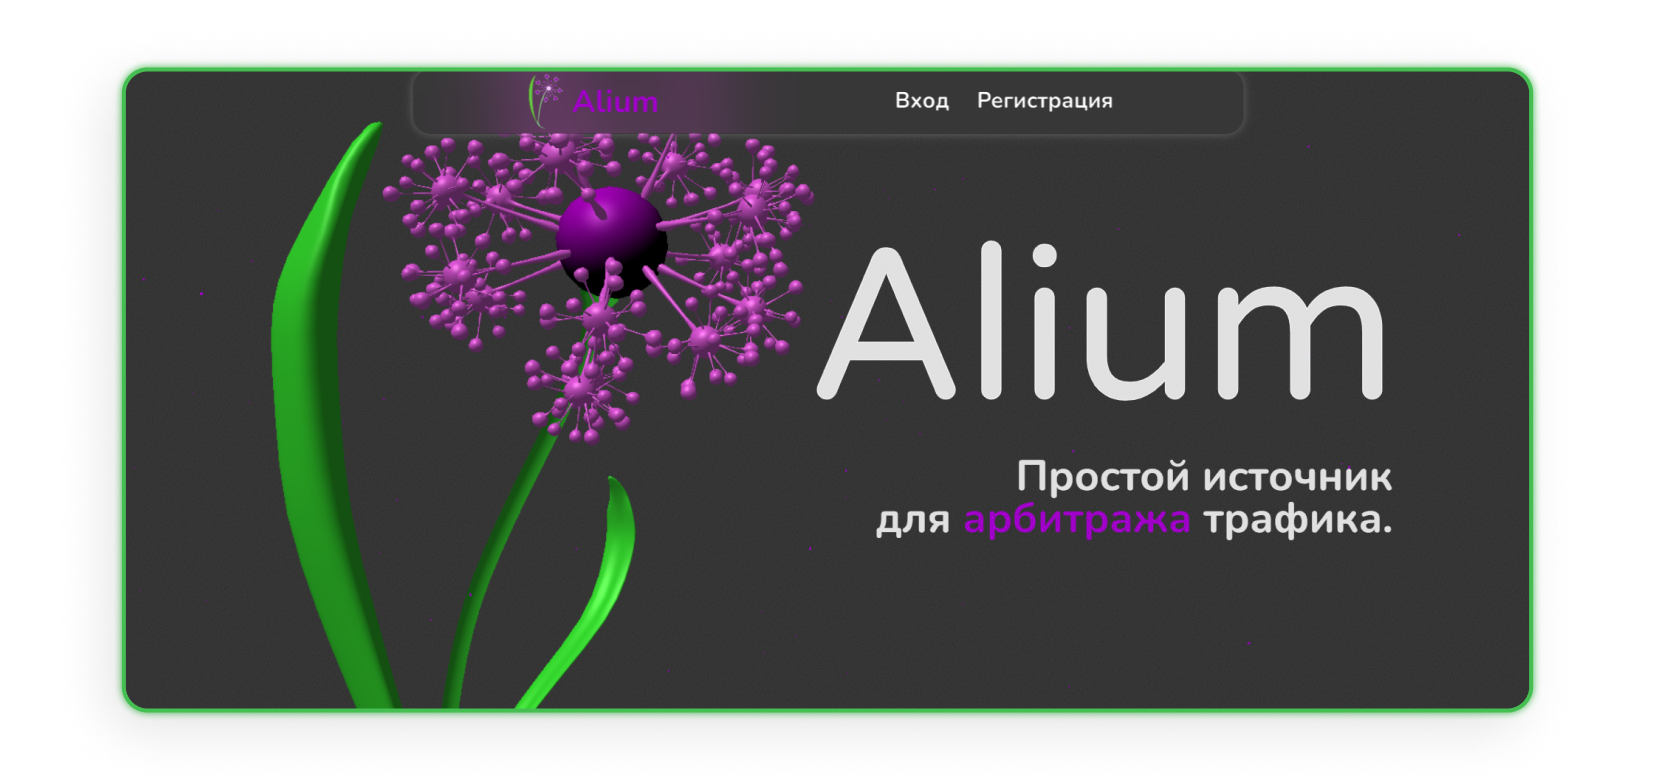 alium-homepage-1.png